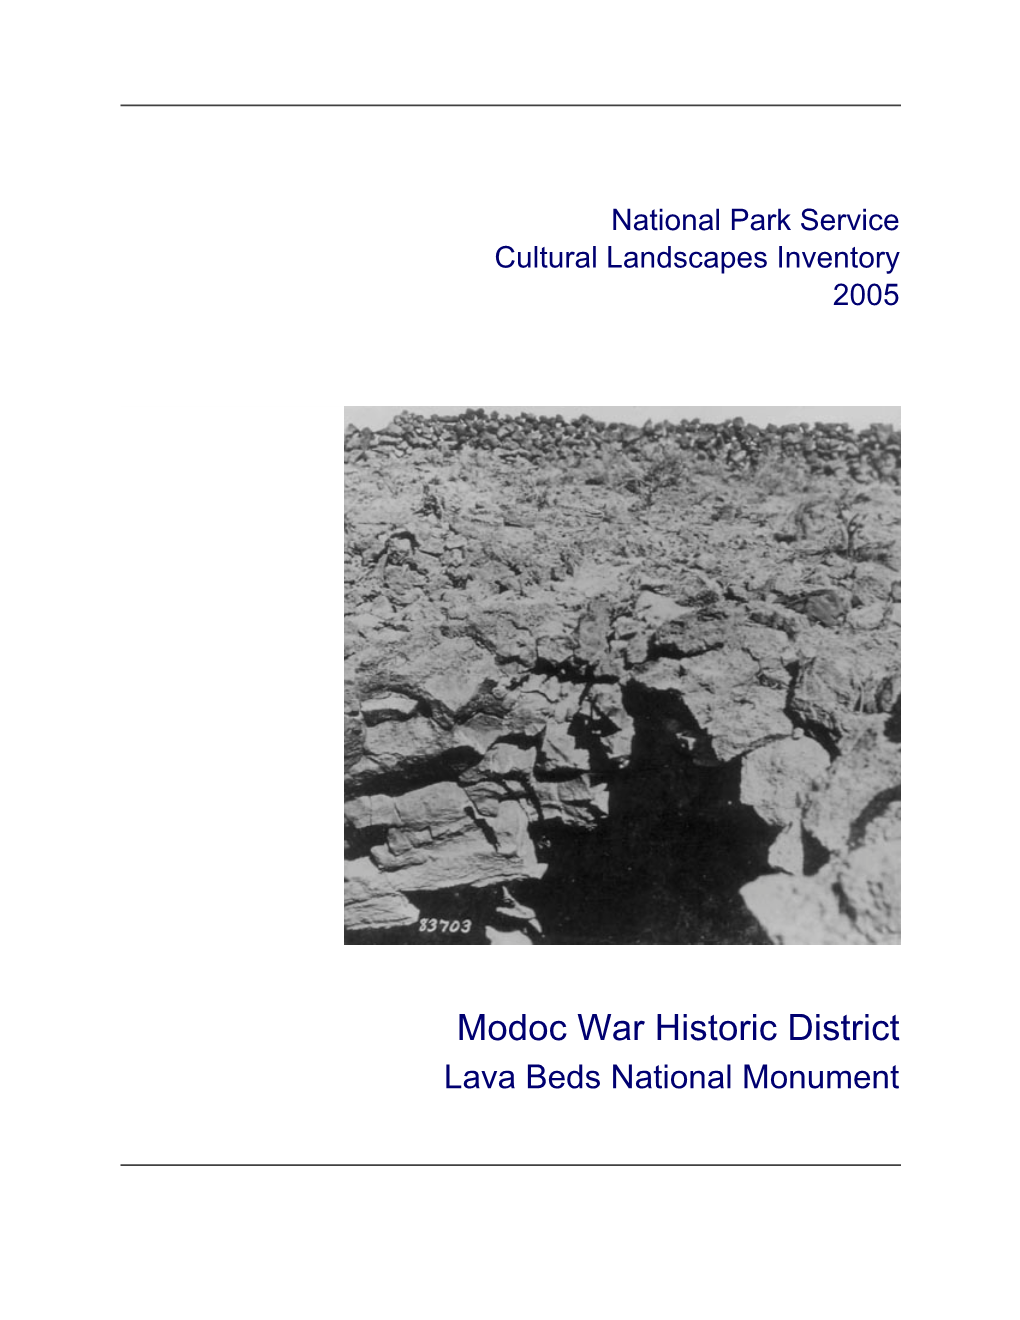 Modoc War Historic District Lava Beds National Monument